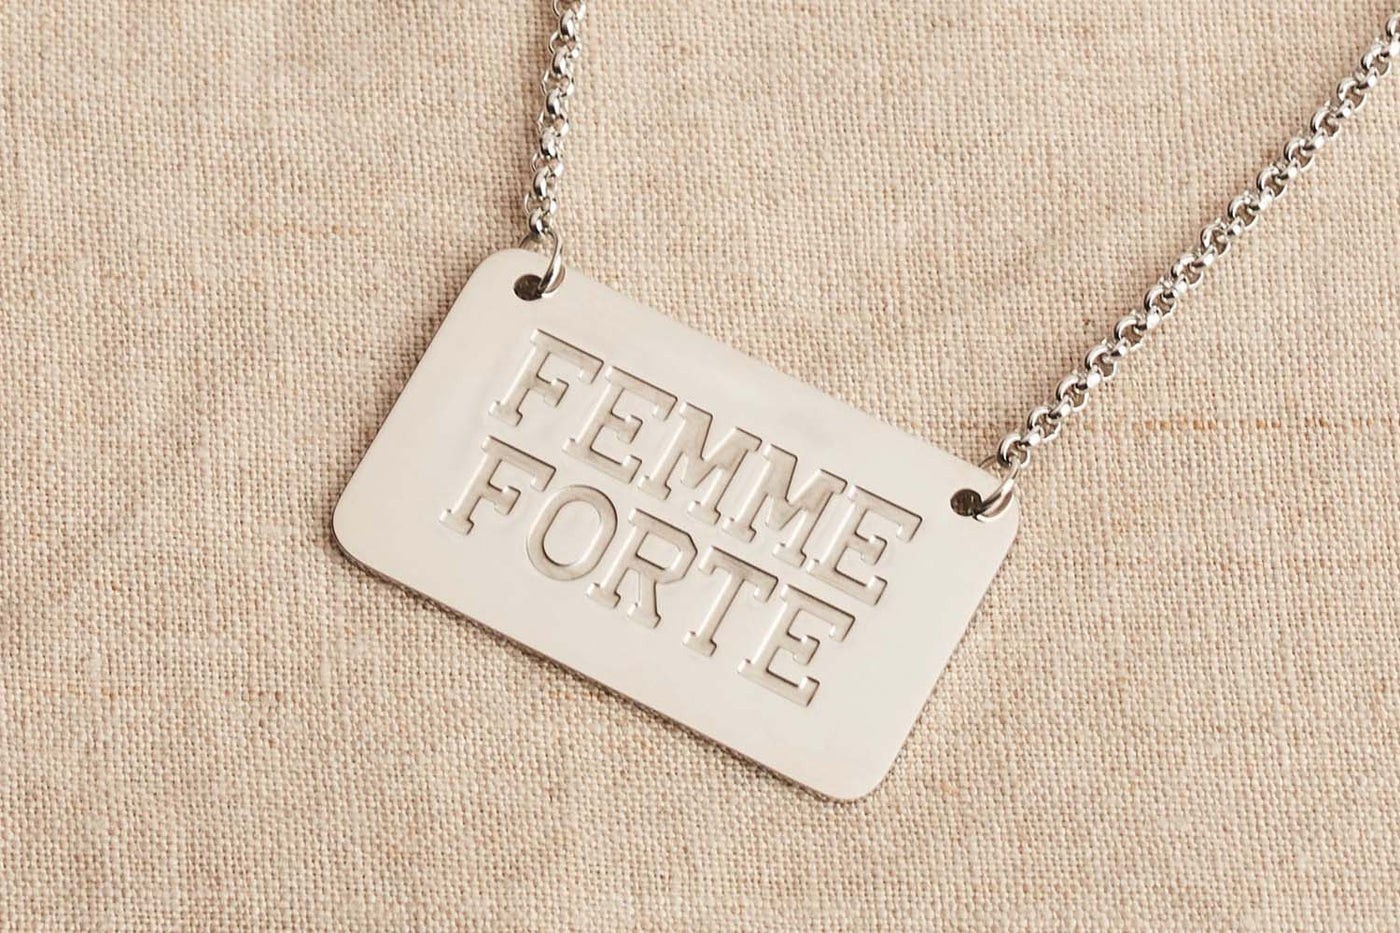 Femme Forte Necklace Necklaces Black & Beech